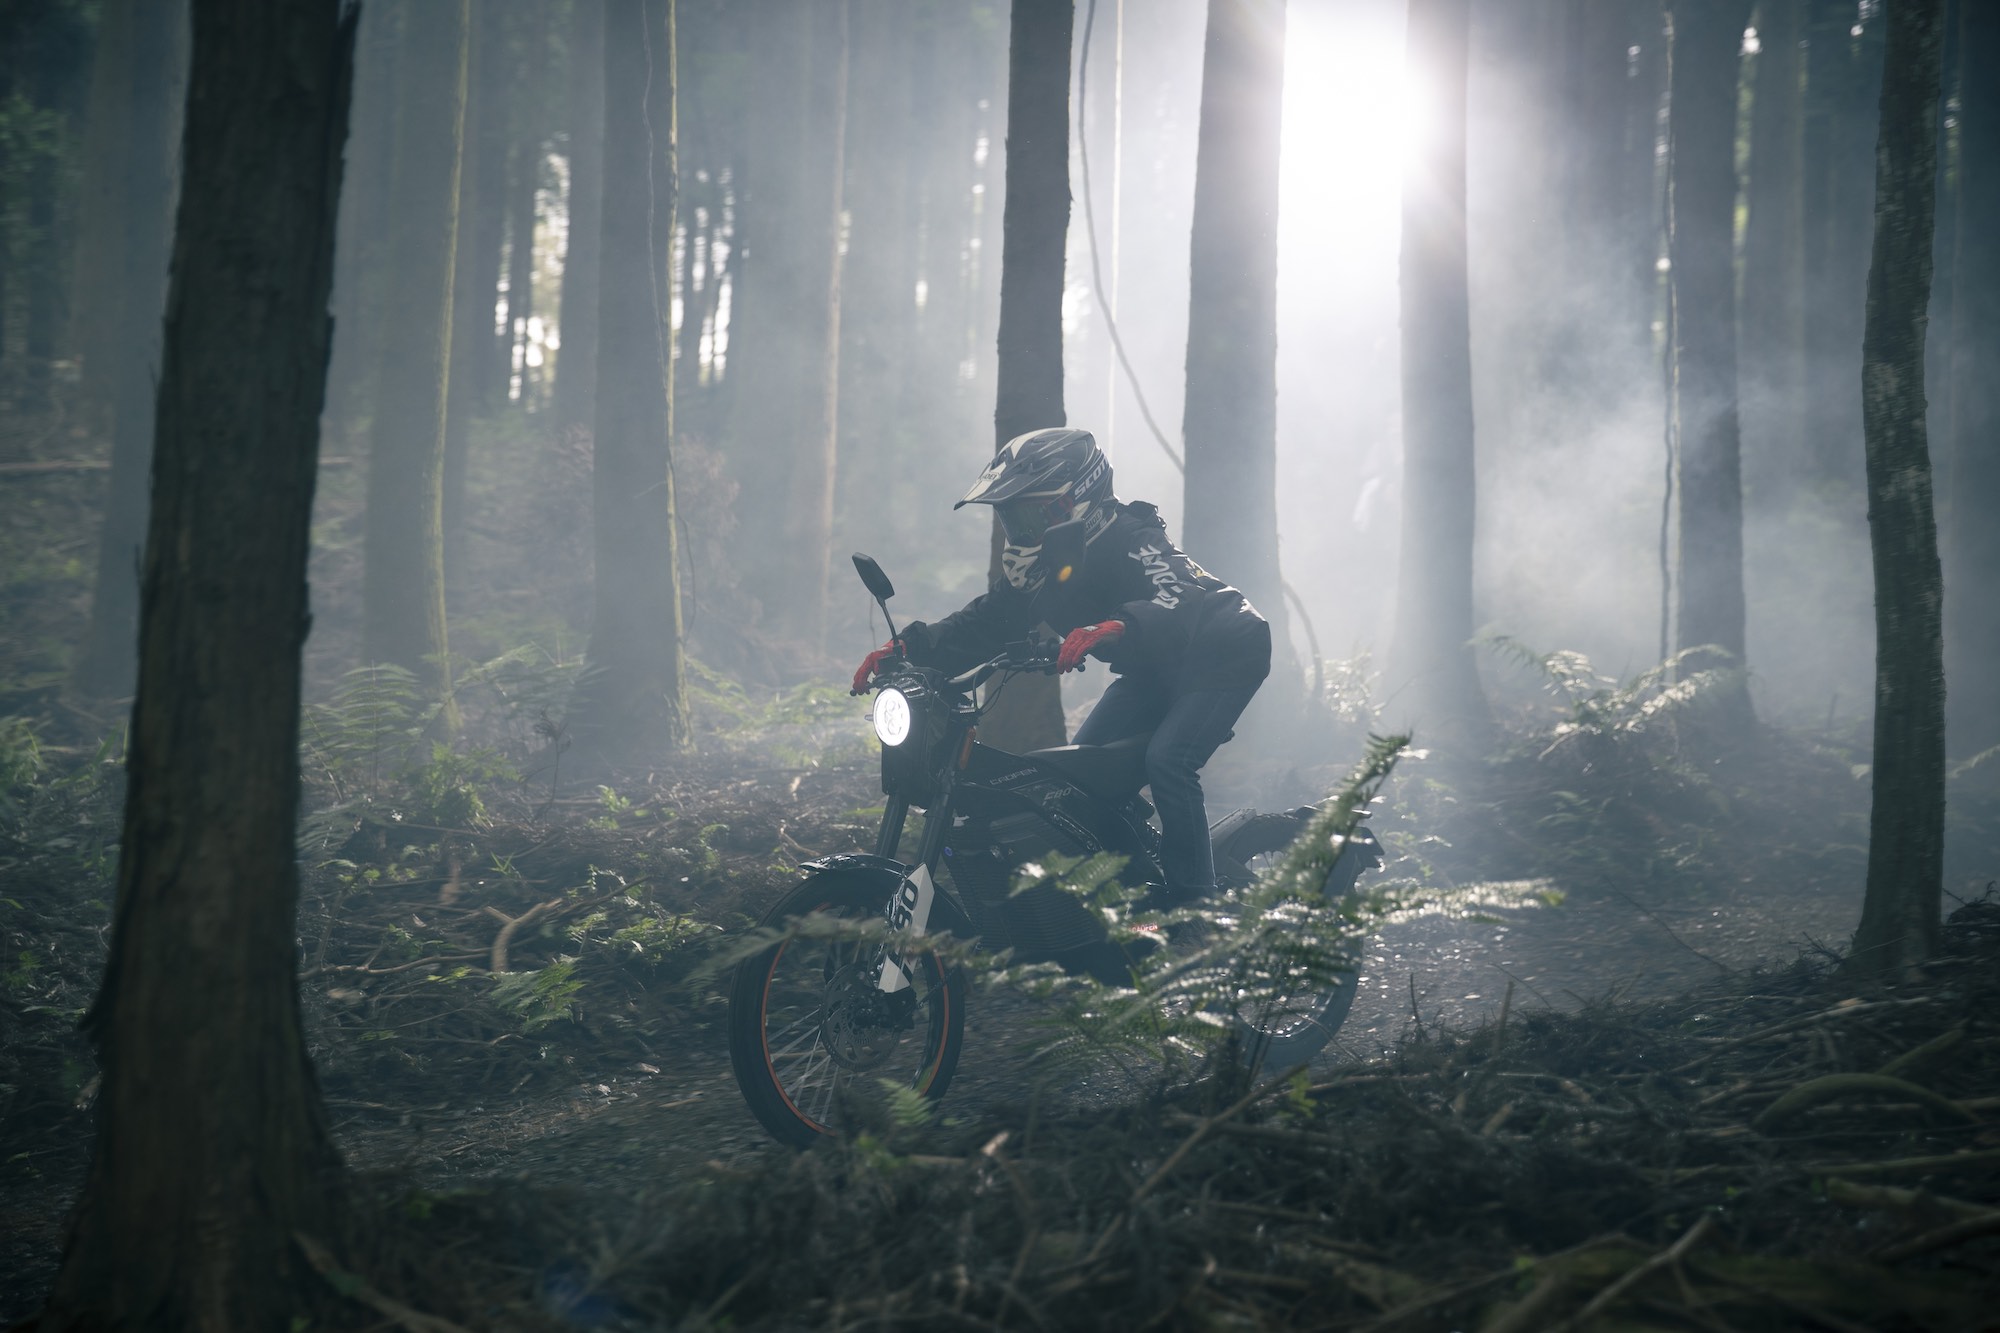 Caofen F80 Etrix Electric Cross Bike Emotion In The Forest